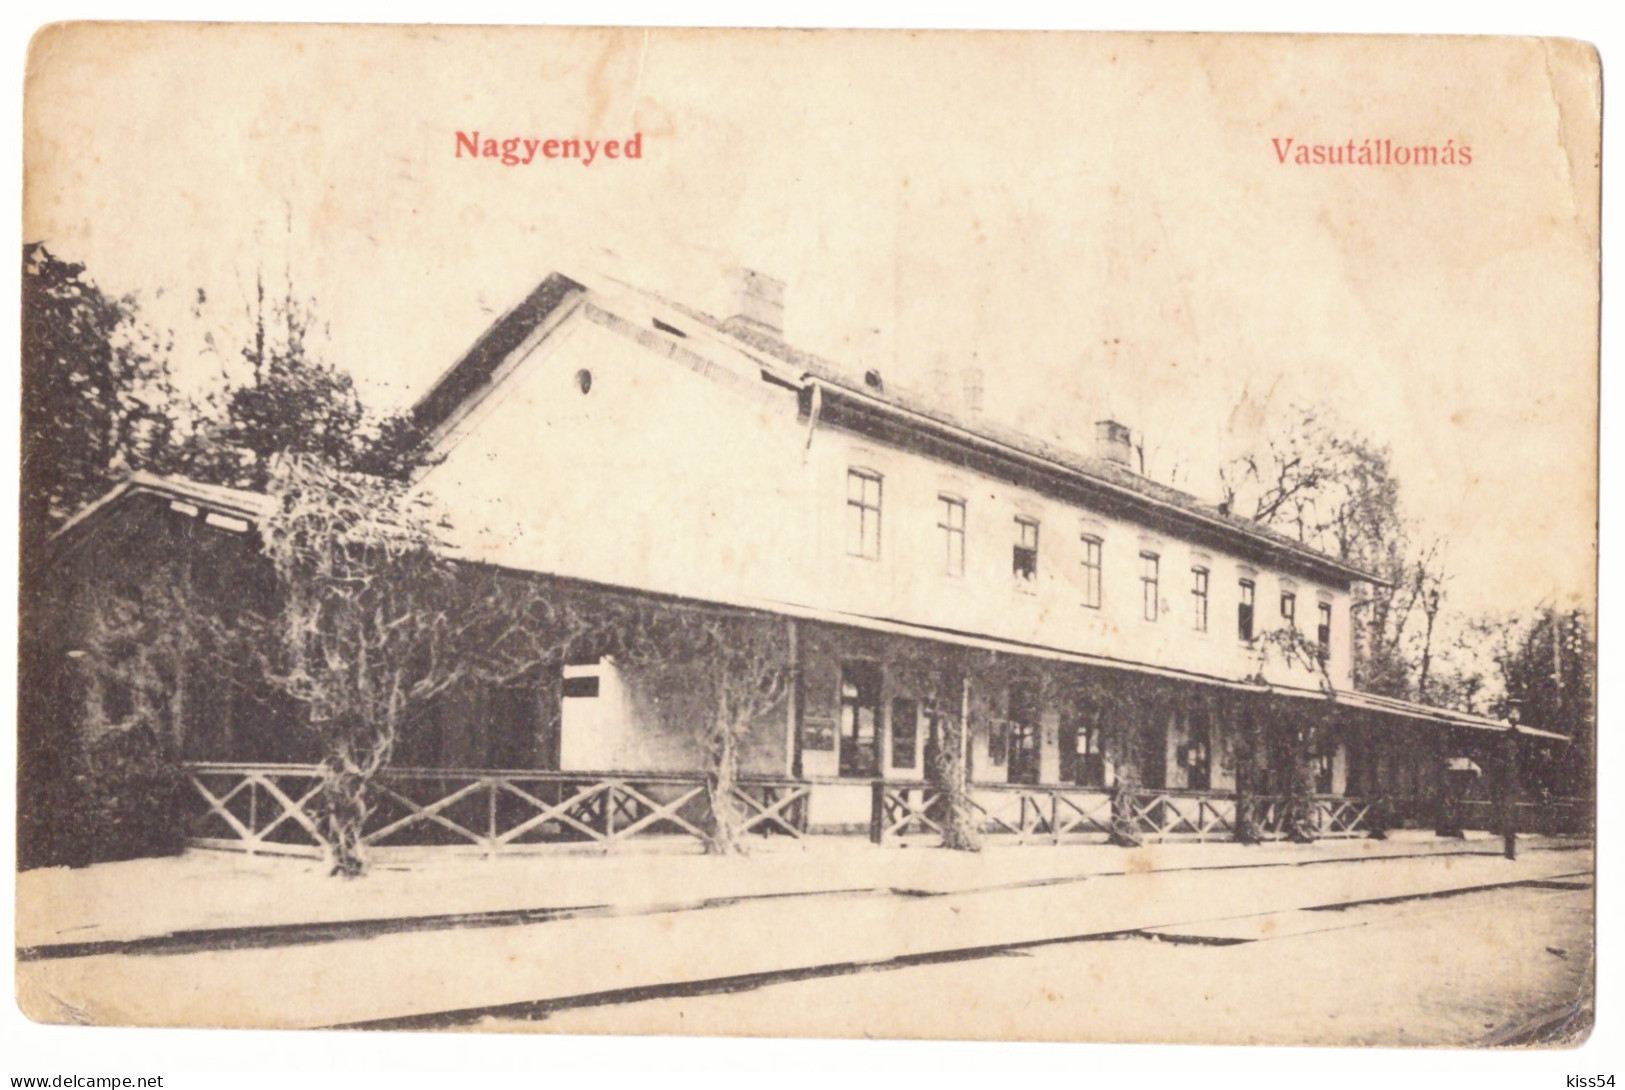 RO 33 - 18229 AIUD, Alba, Railway Station, Romania - Old Postcard - Used - 1910 - Roumanie